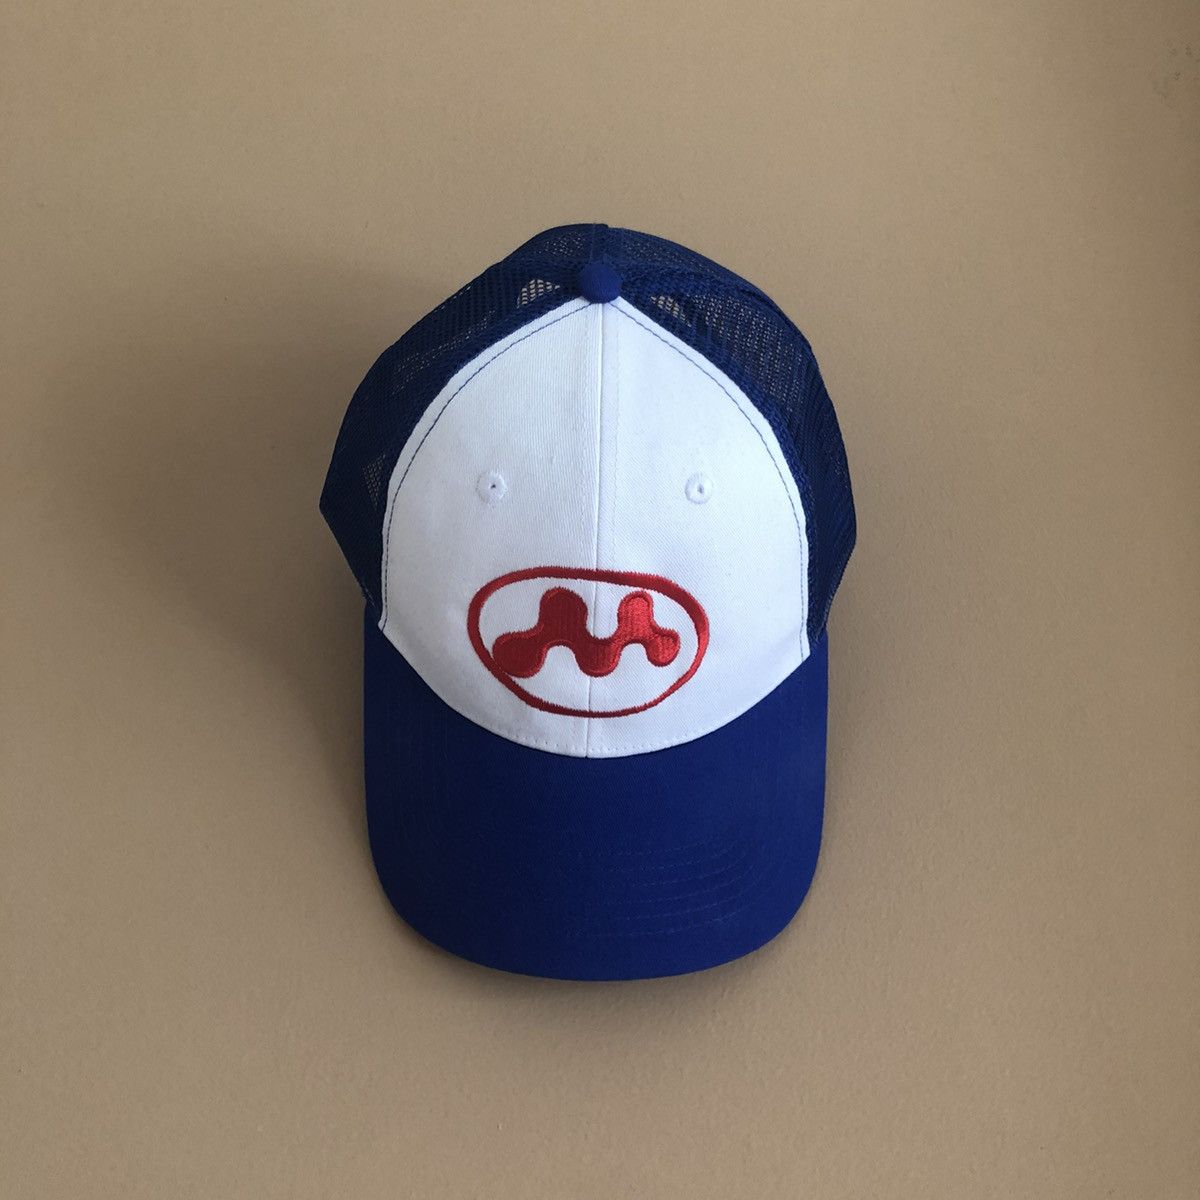 Mowalola Mowalola “Puff Puff” Trucker Hat | Grailed